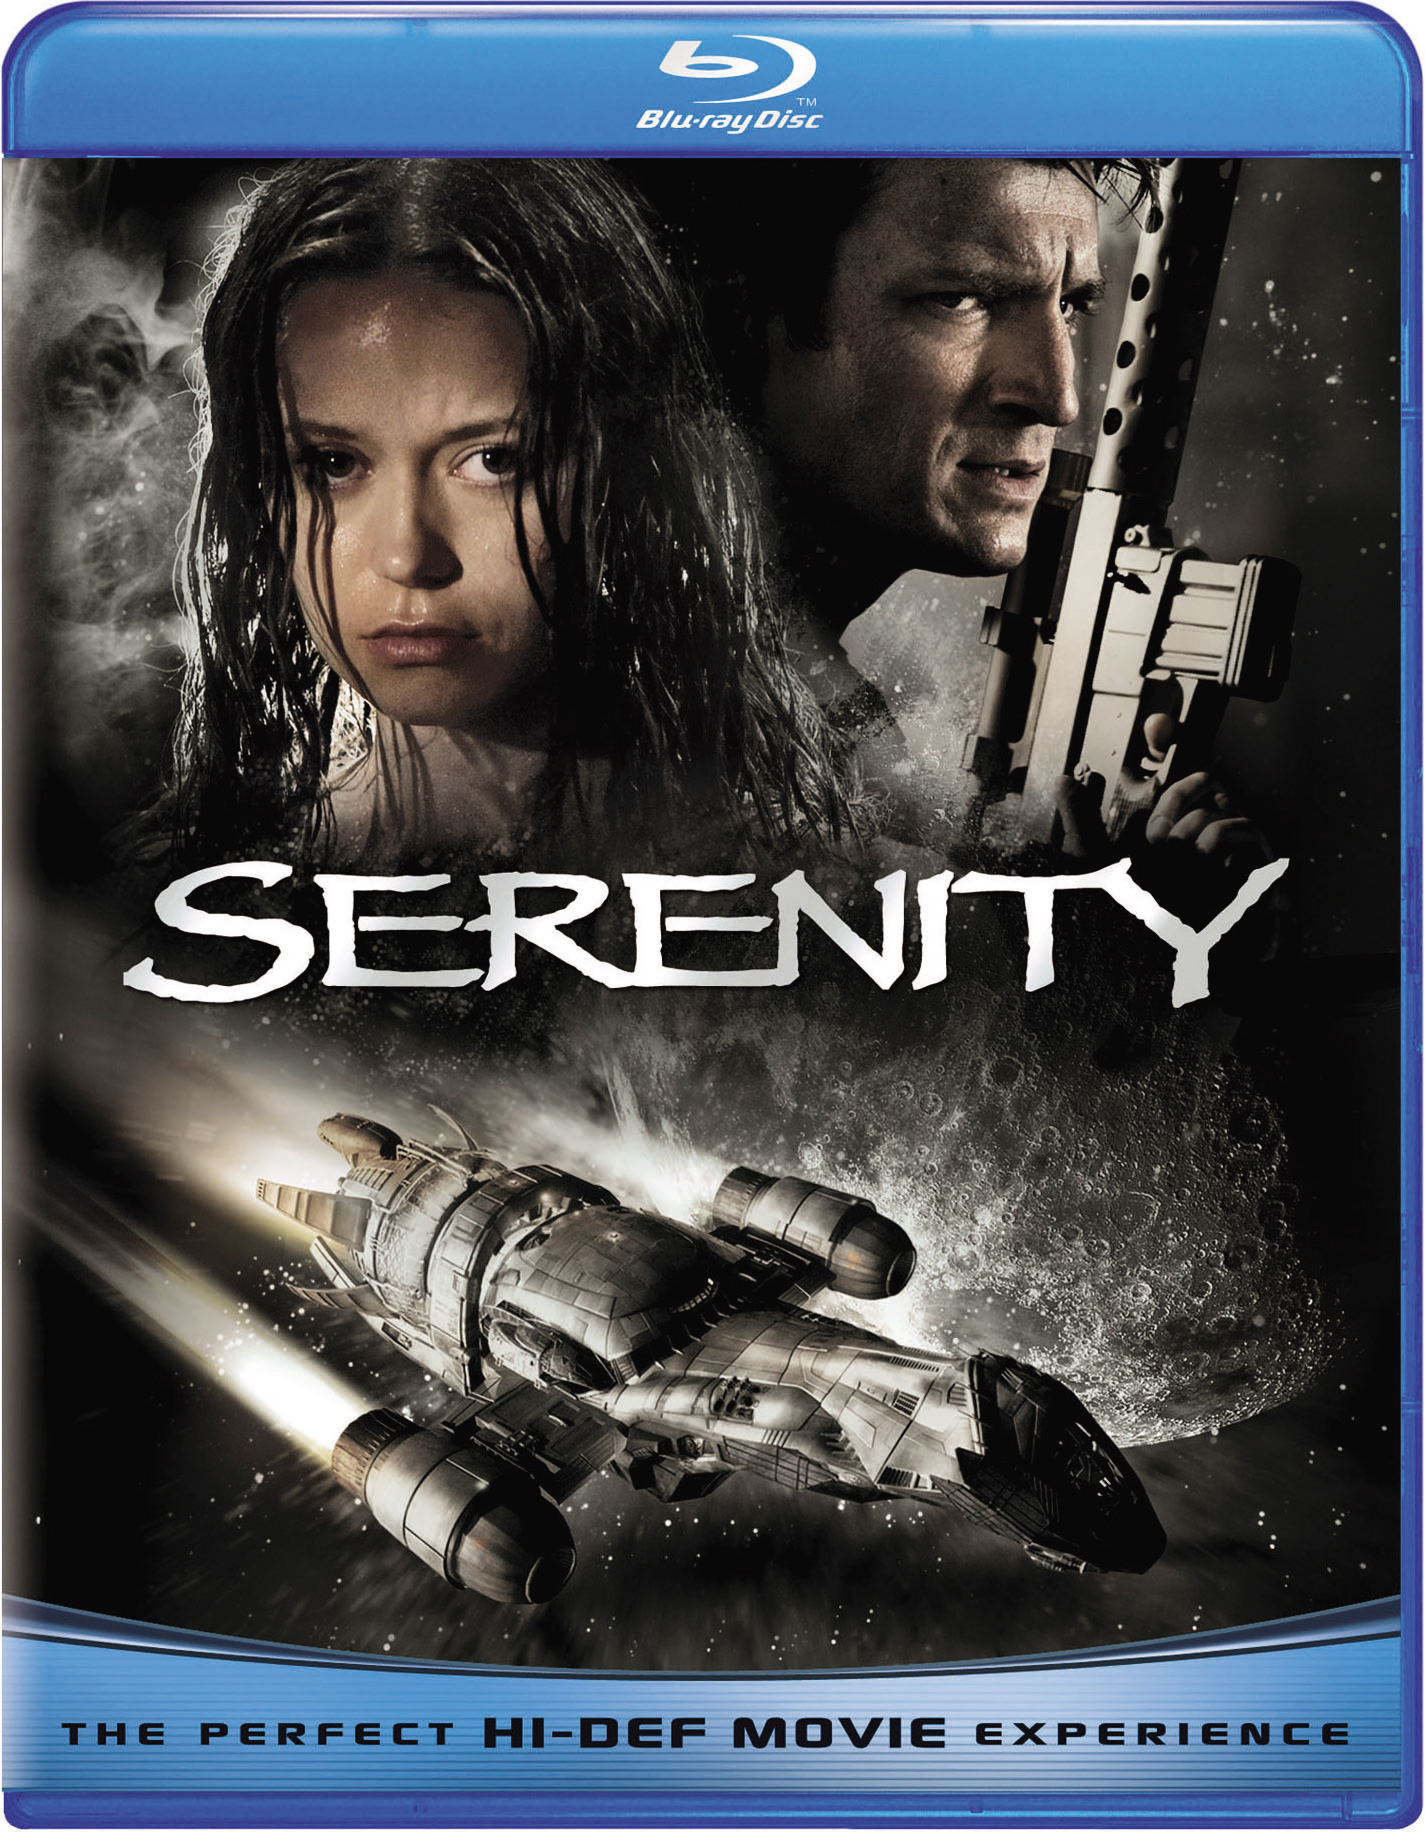 Serenity - Blu-ray [ 2005 ]  - Sci Fi Movies On Blu-ray - Movies On GRUV